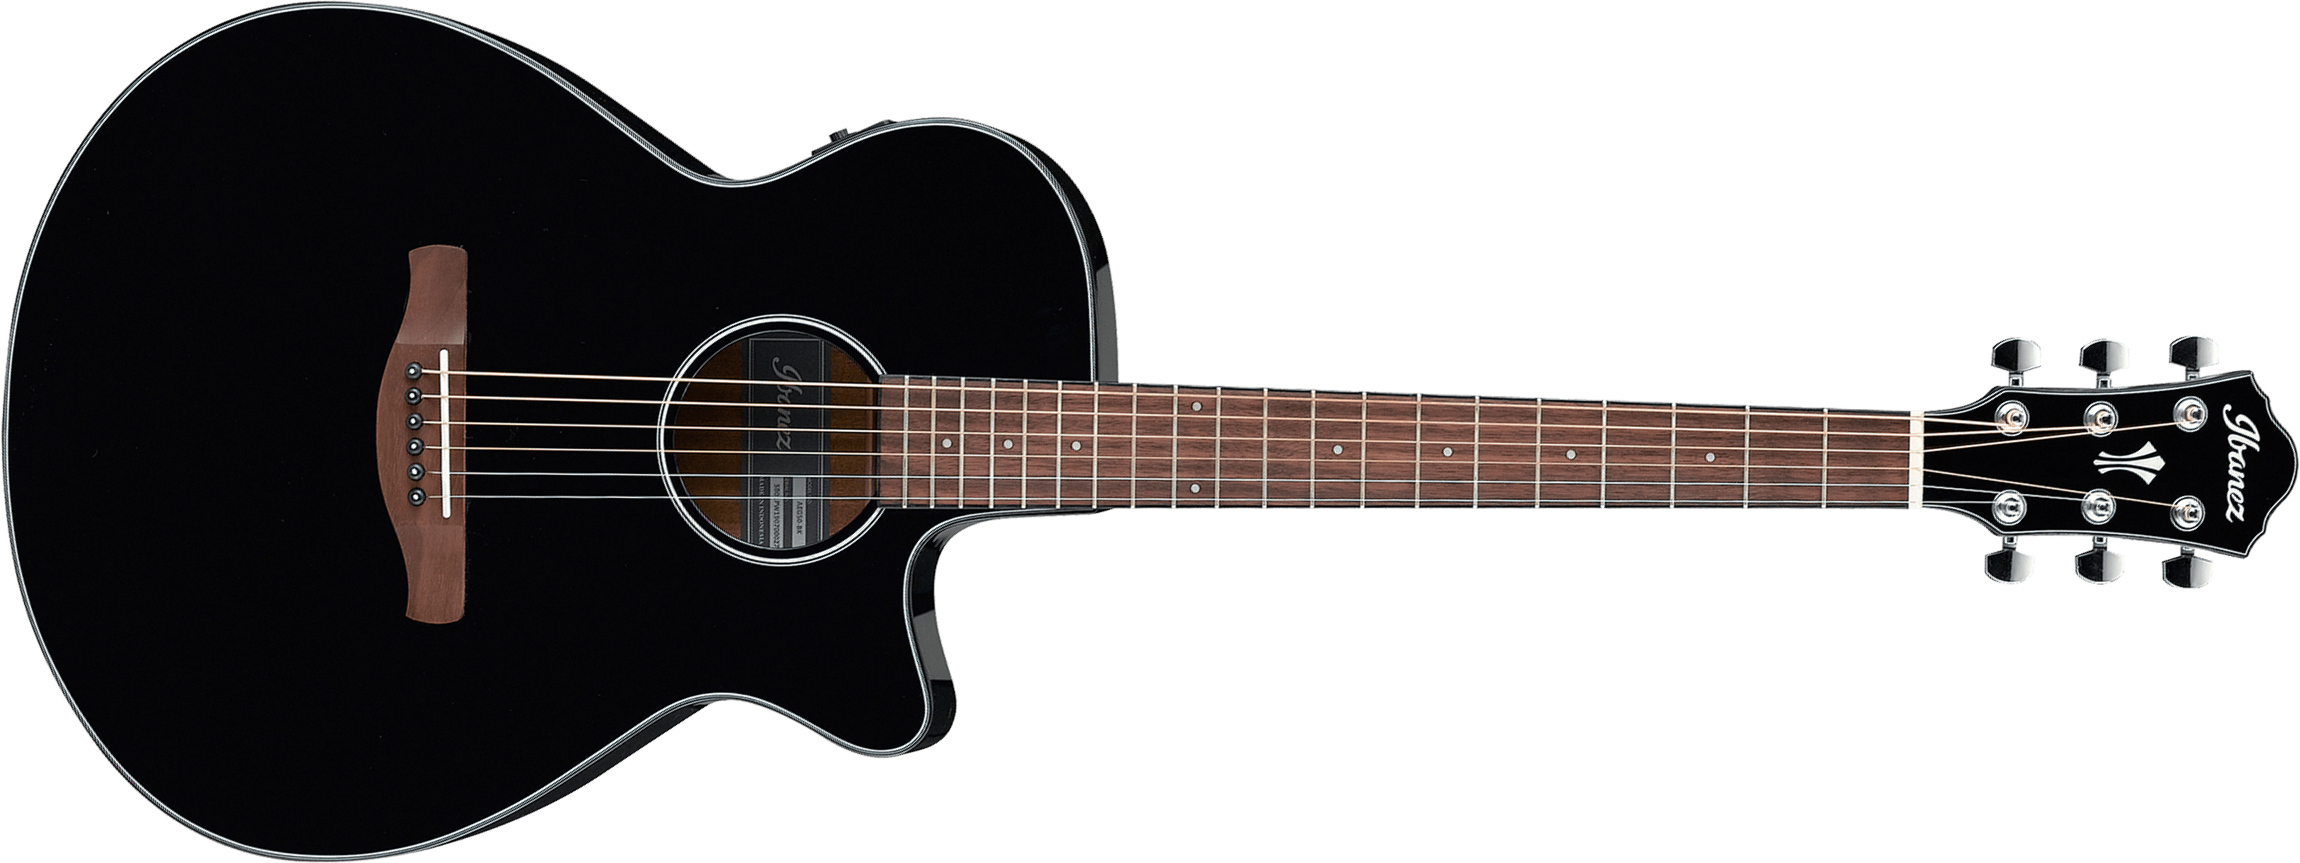 Ibanez Aeg50 Bk Concert Cw Epicea Sapele Wal - Black - Electro acoustic guitar - Main picture